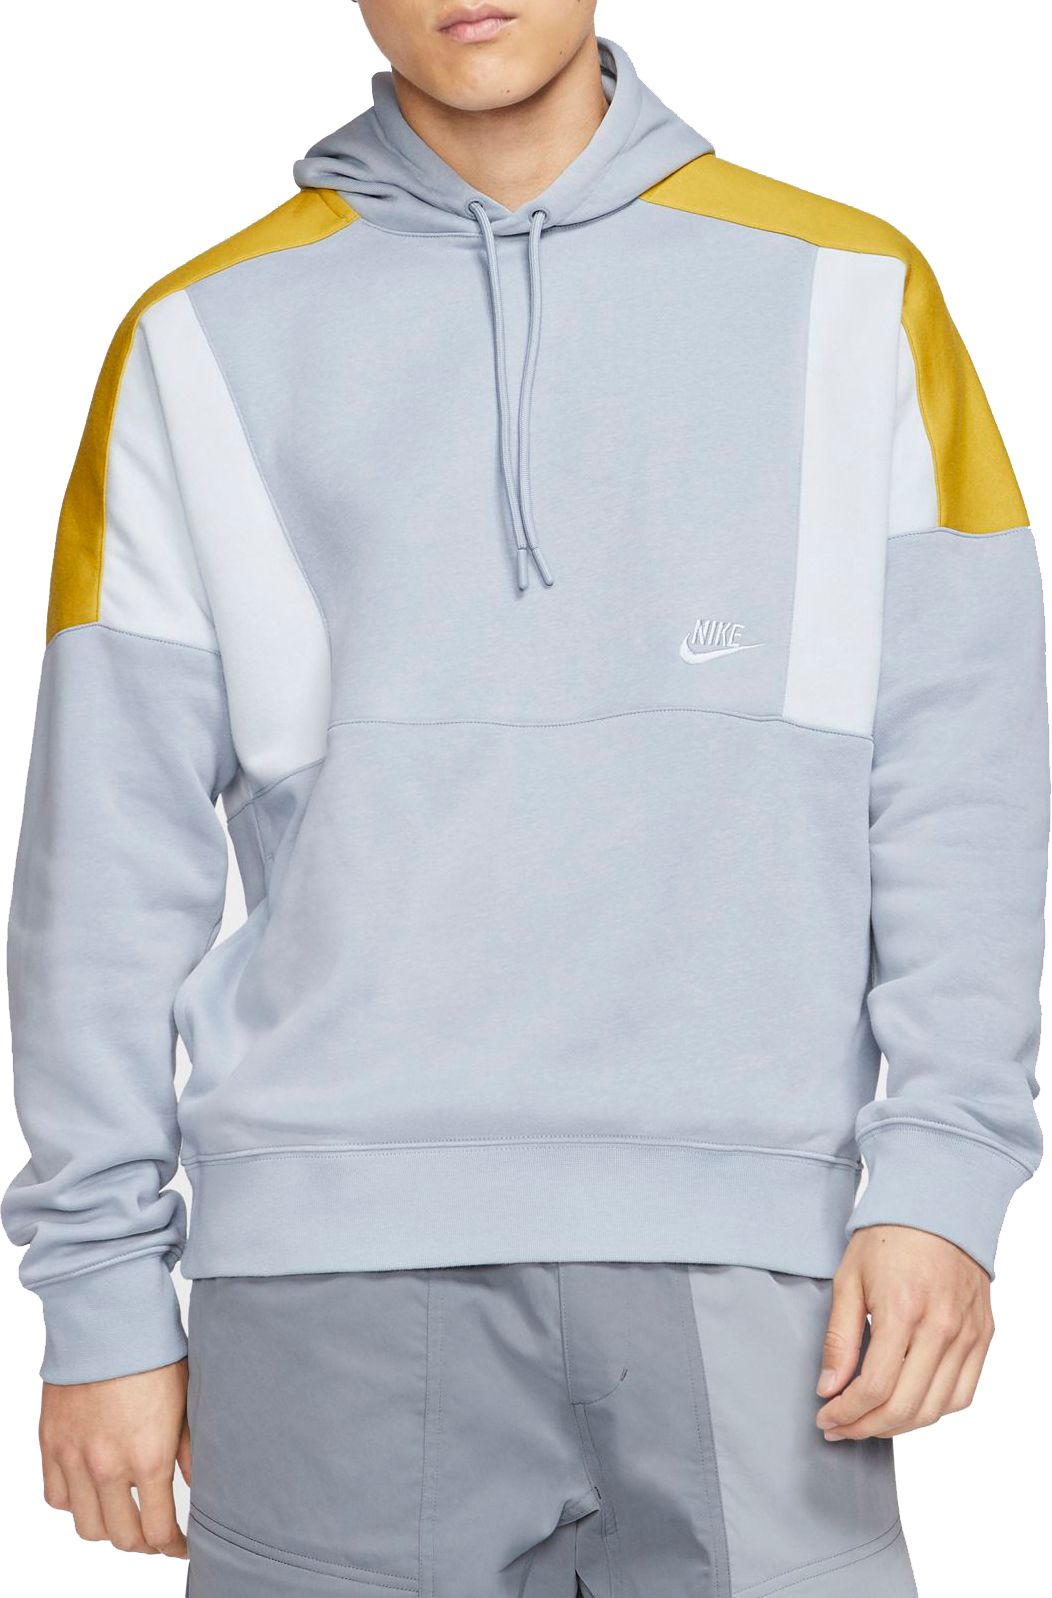 Nike Men's Sportswear Colorblocked Pullover Hoodie - .75